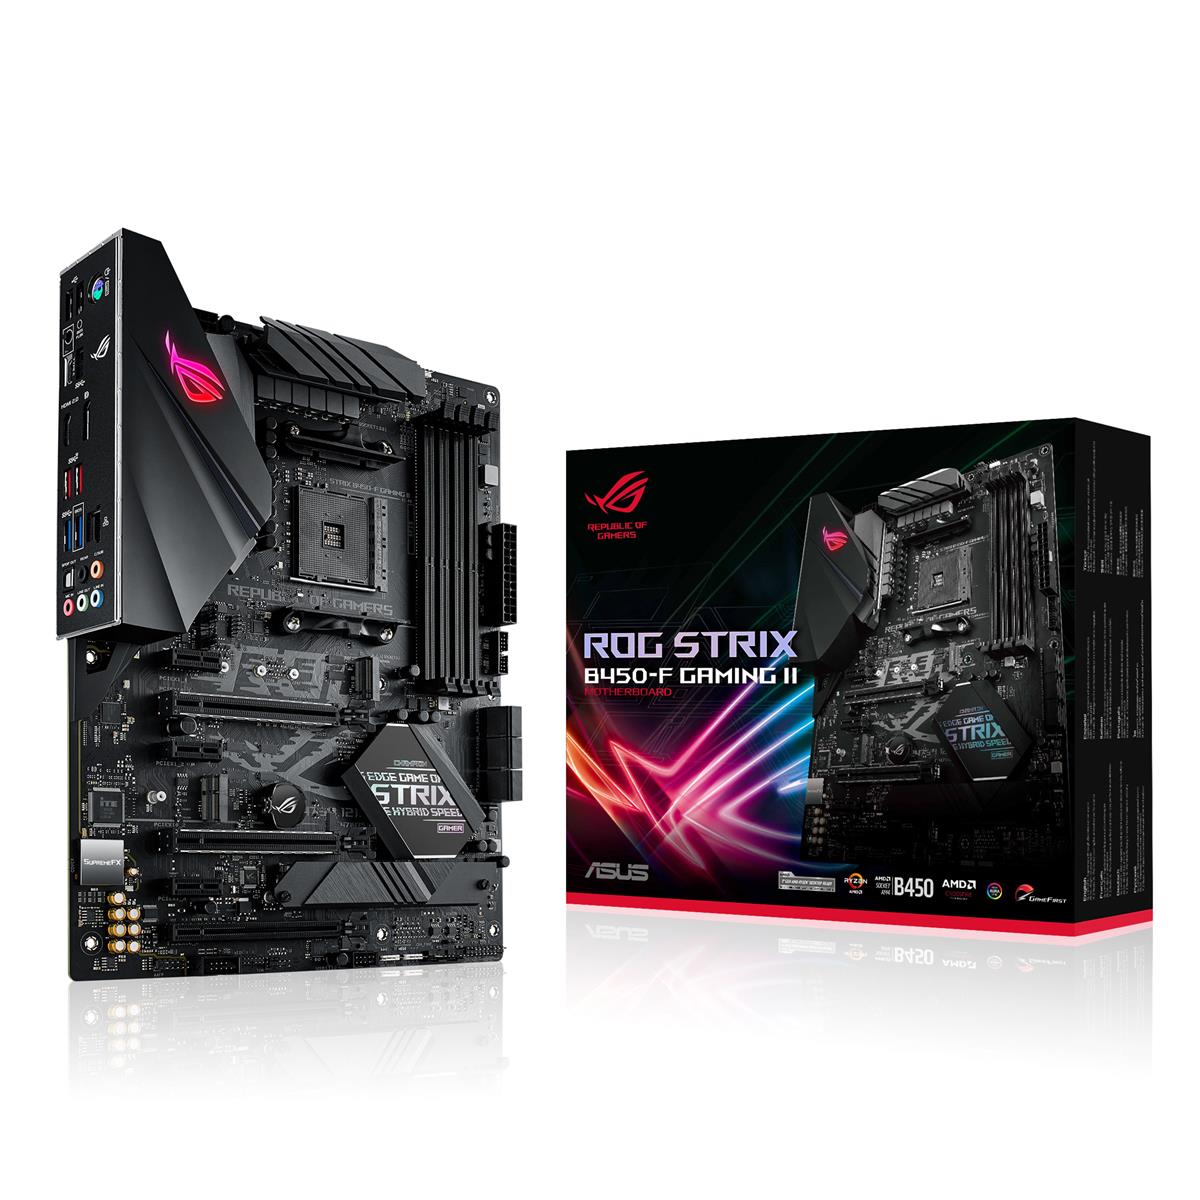 Image of ASUS ROG STRIX B450-F GAMING II AMD Socket AM4 ATX Gaming Motherboard